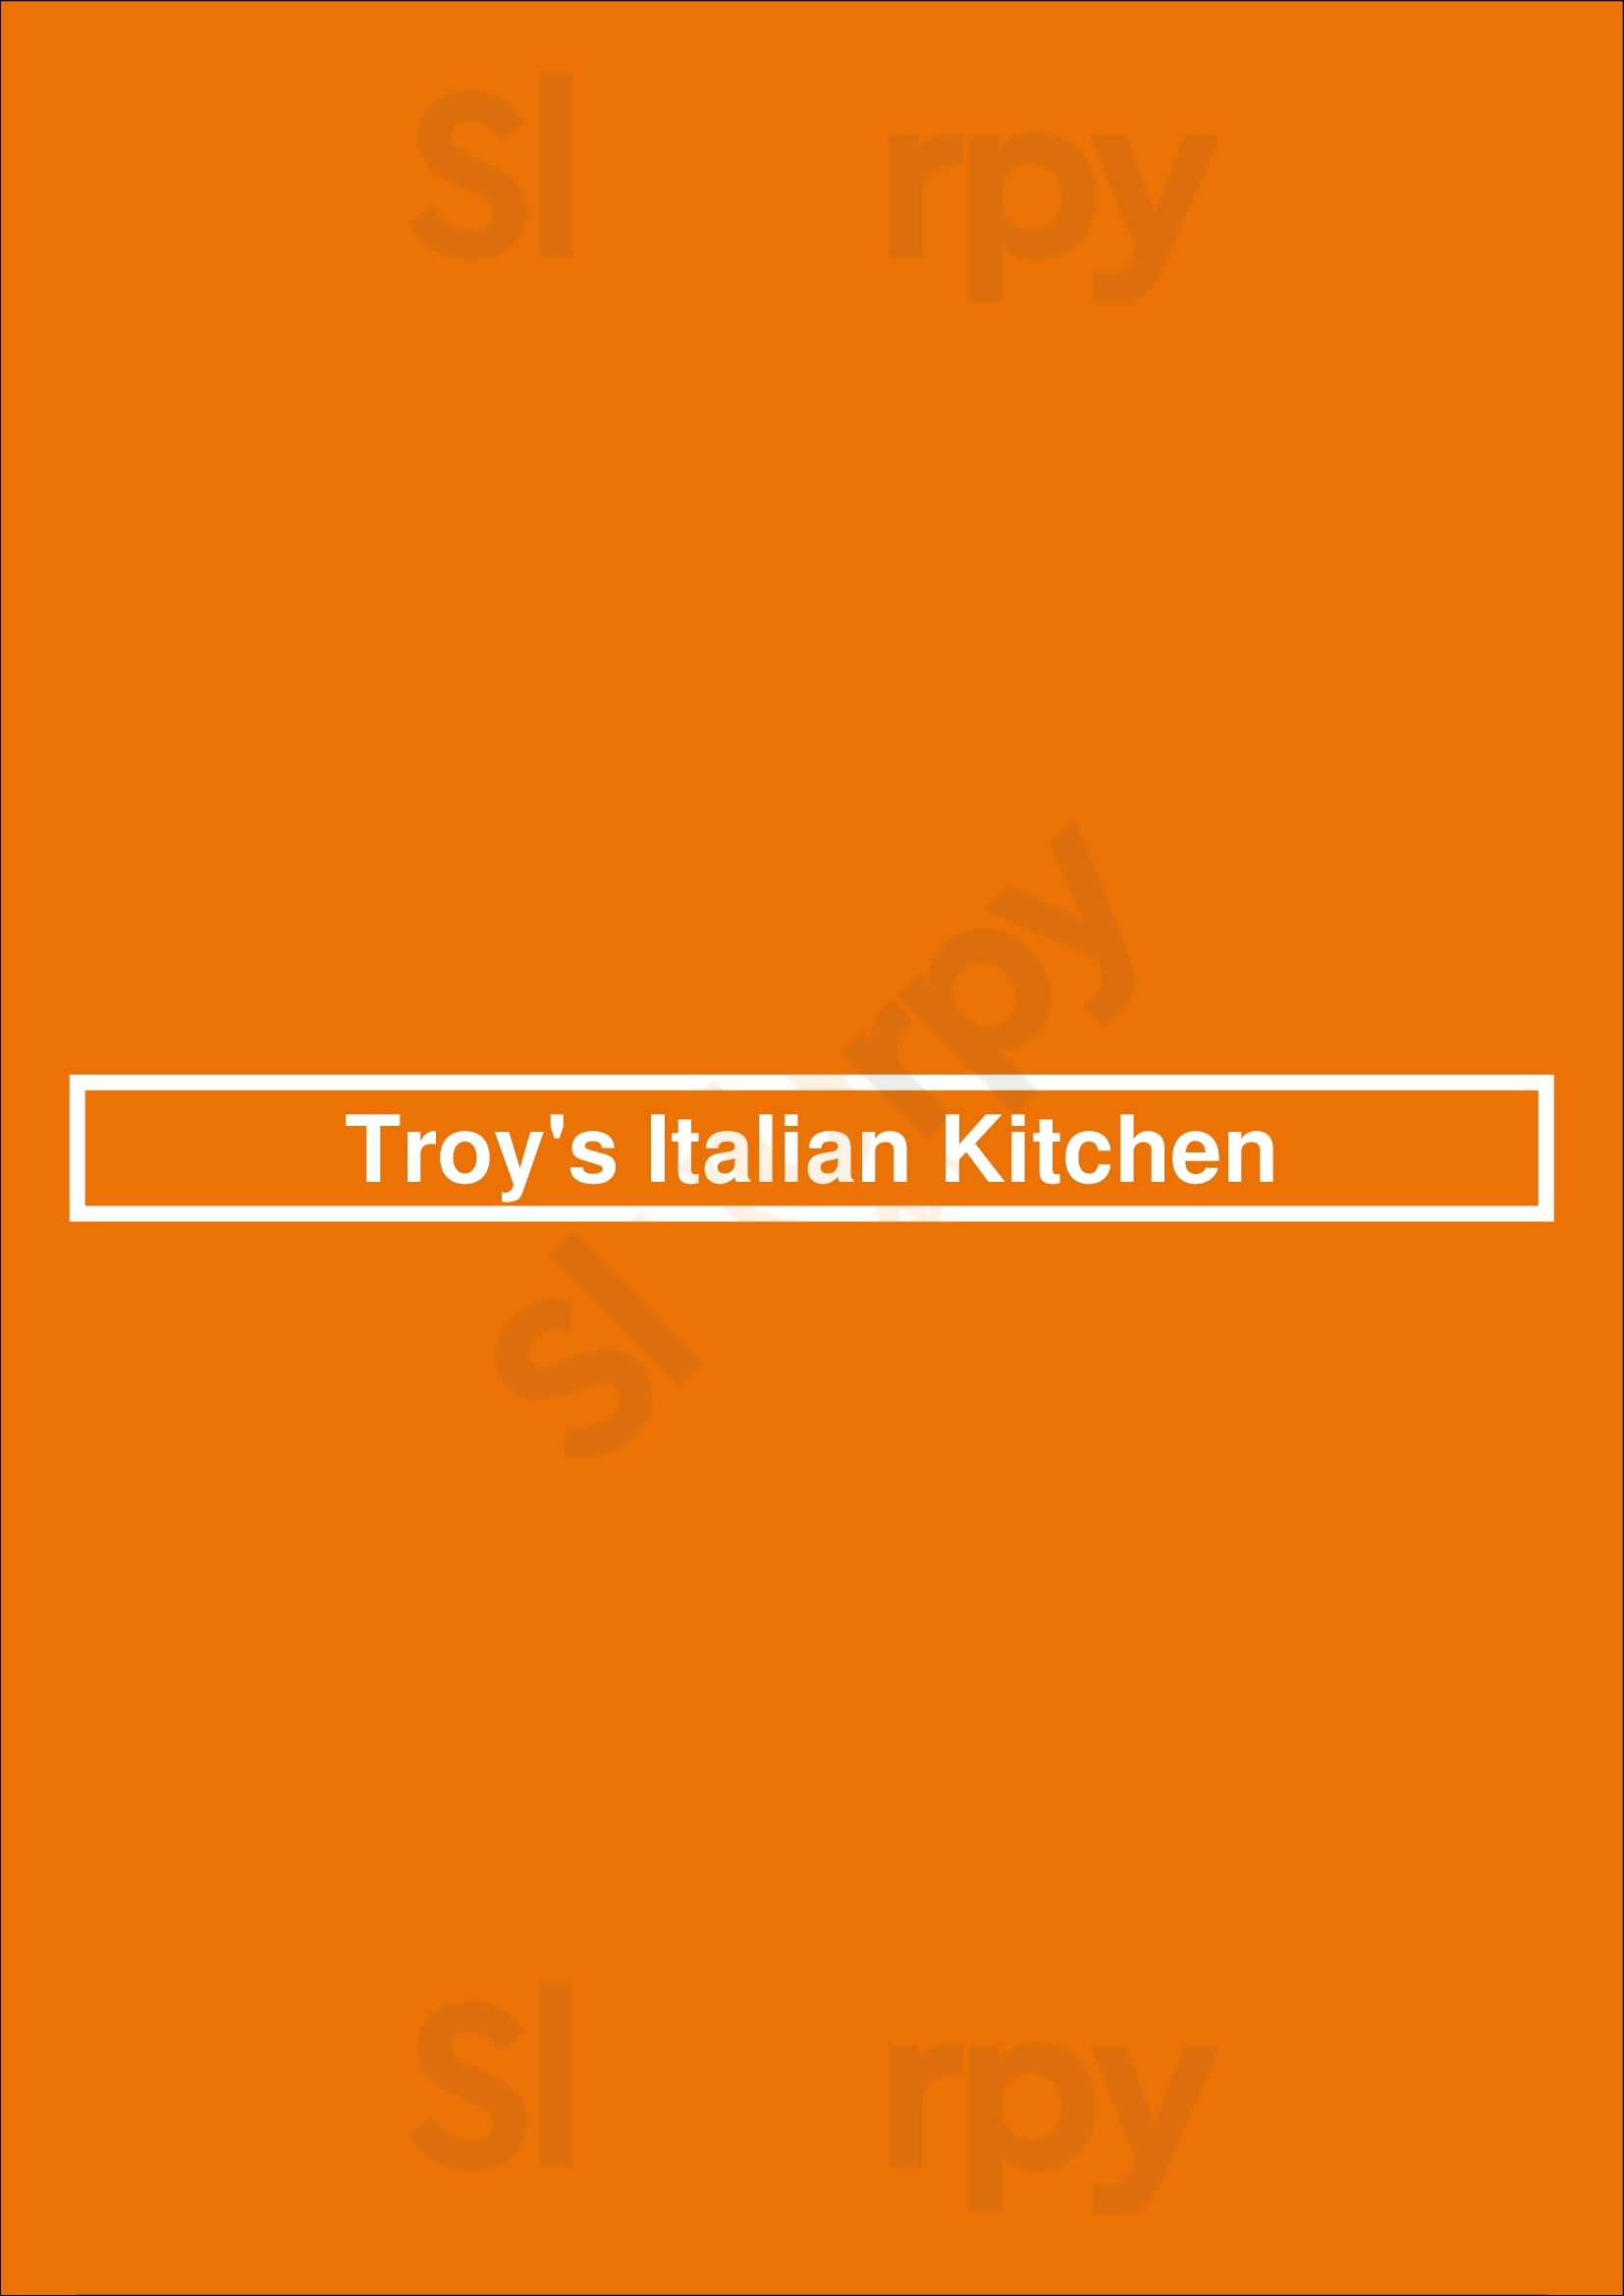 Troy's Italian Kitchen Arlington Menu - 1